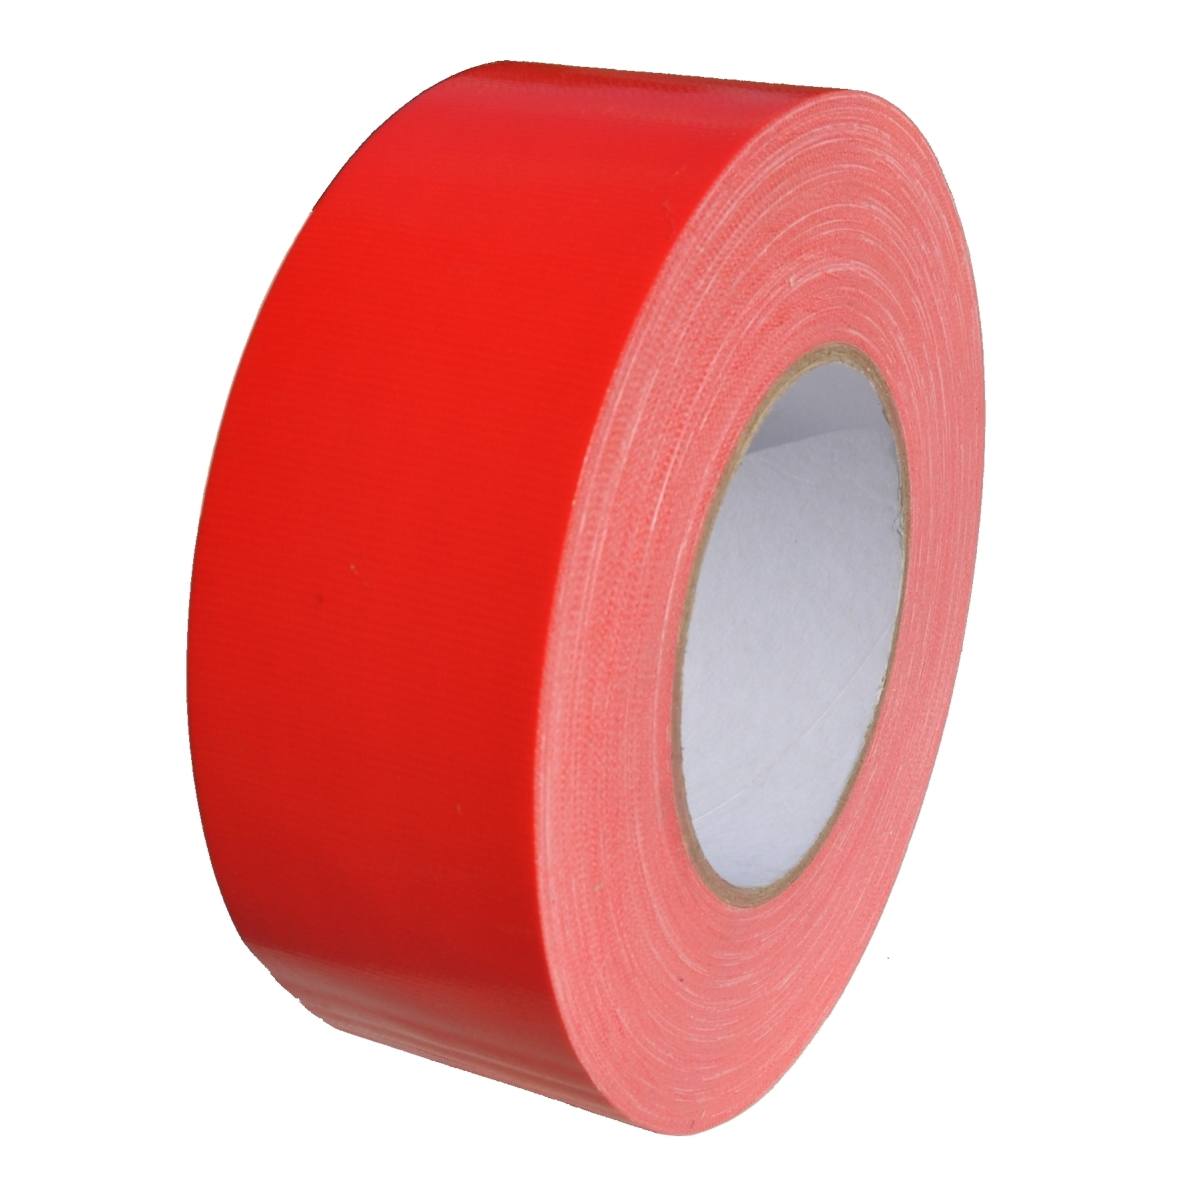 S-K-S 990 Fabric tape 100mmx50m red